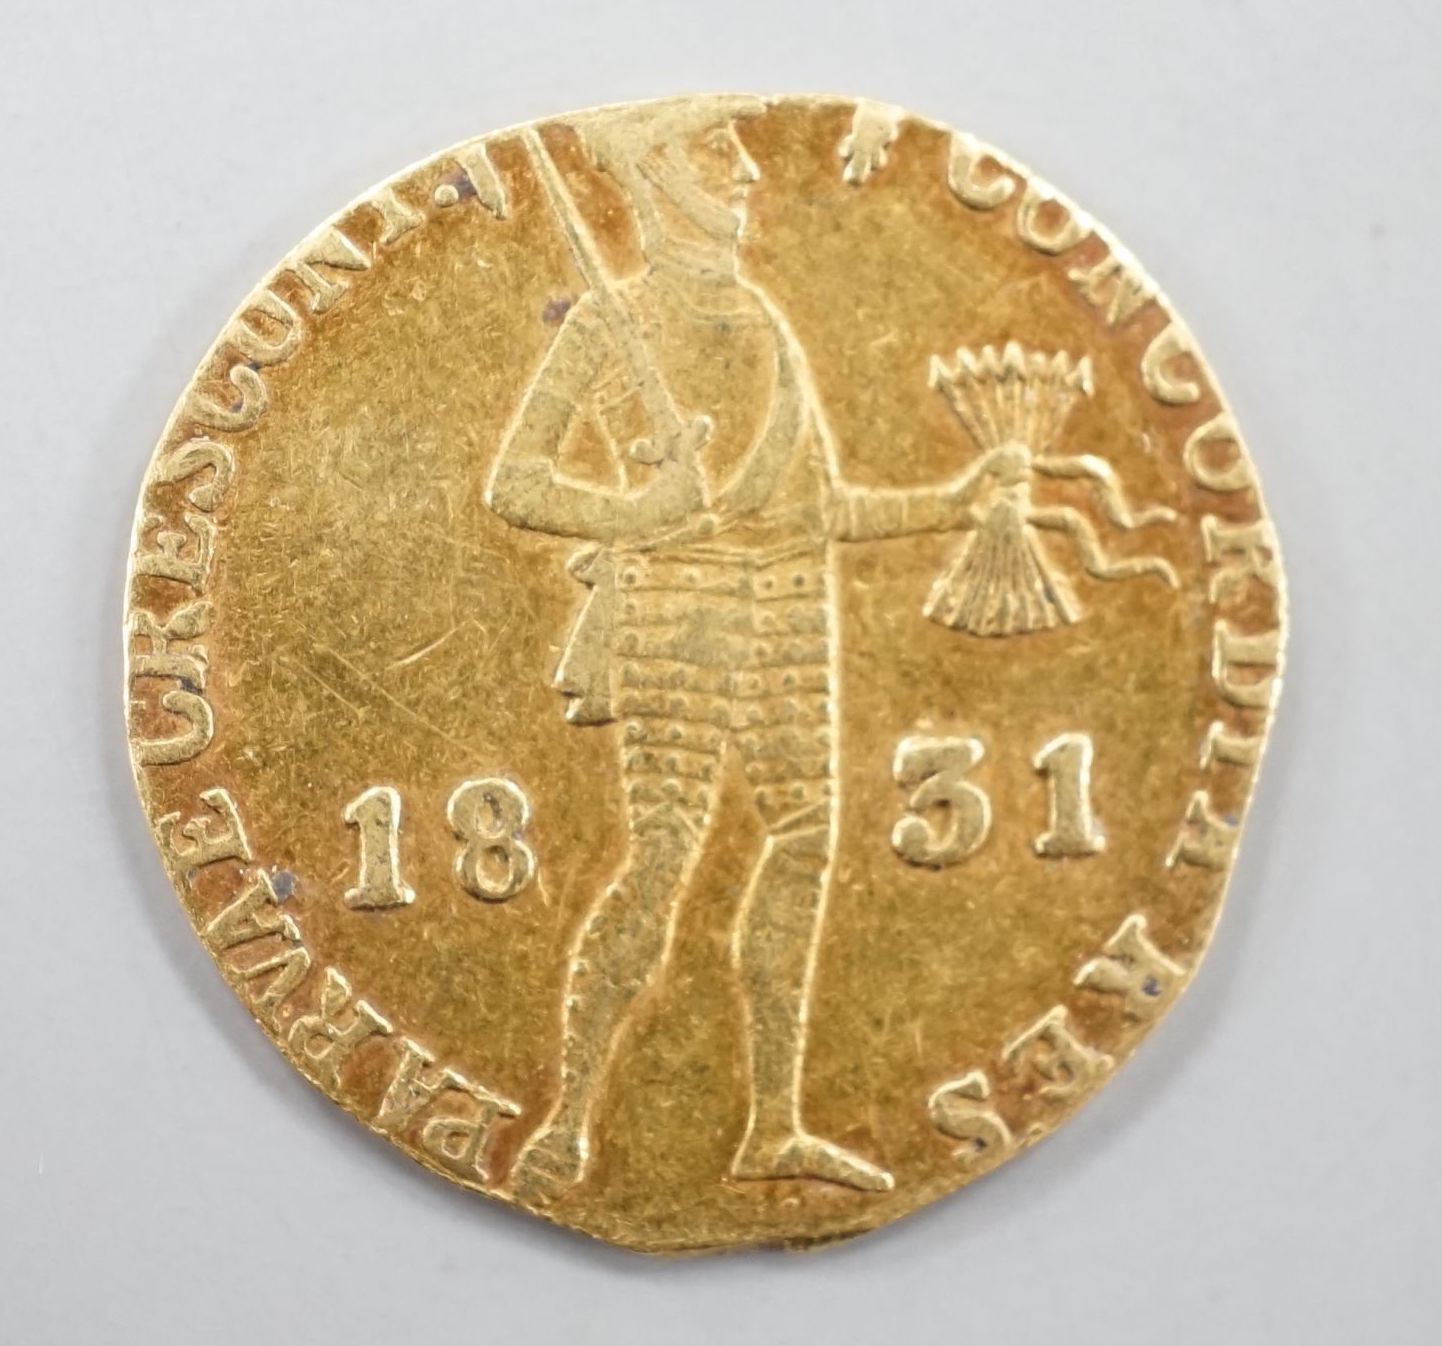 A Netherlands 1831 gold ducat coin.